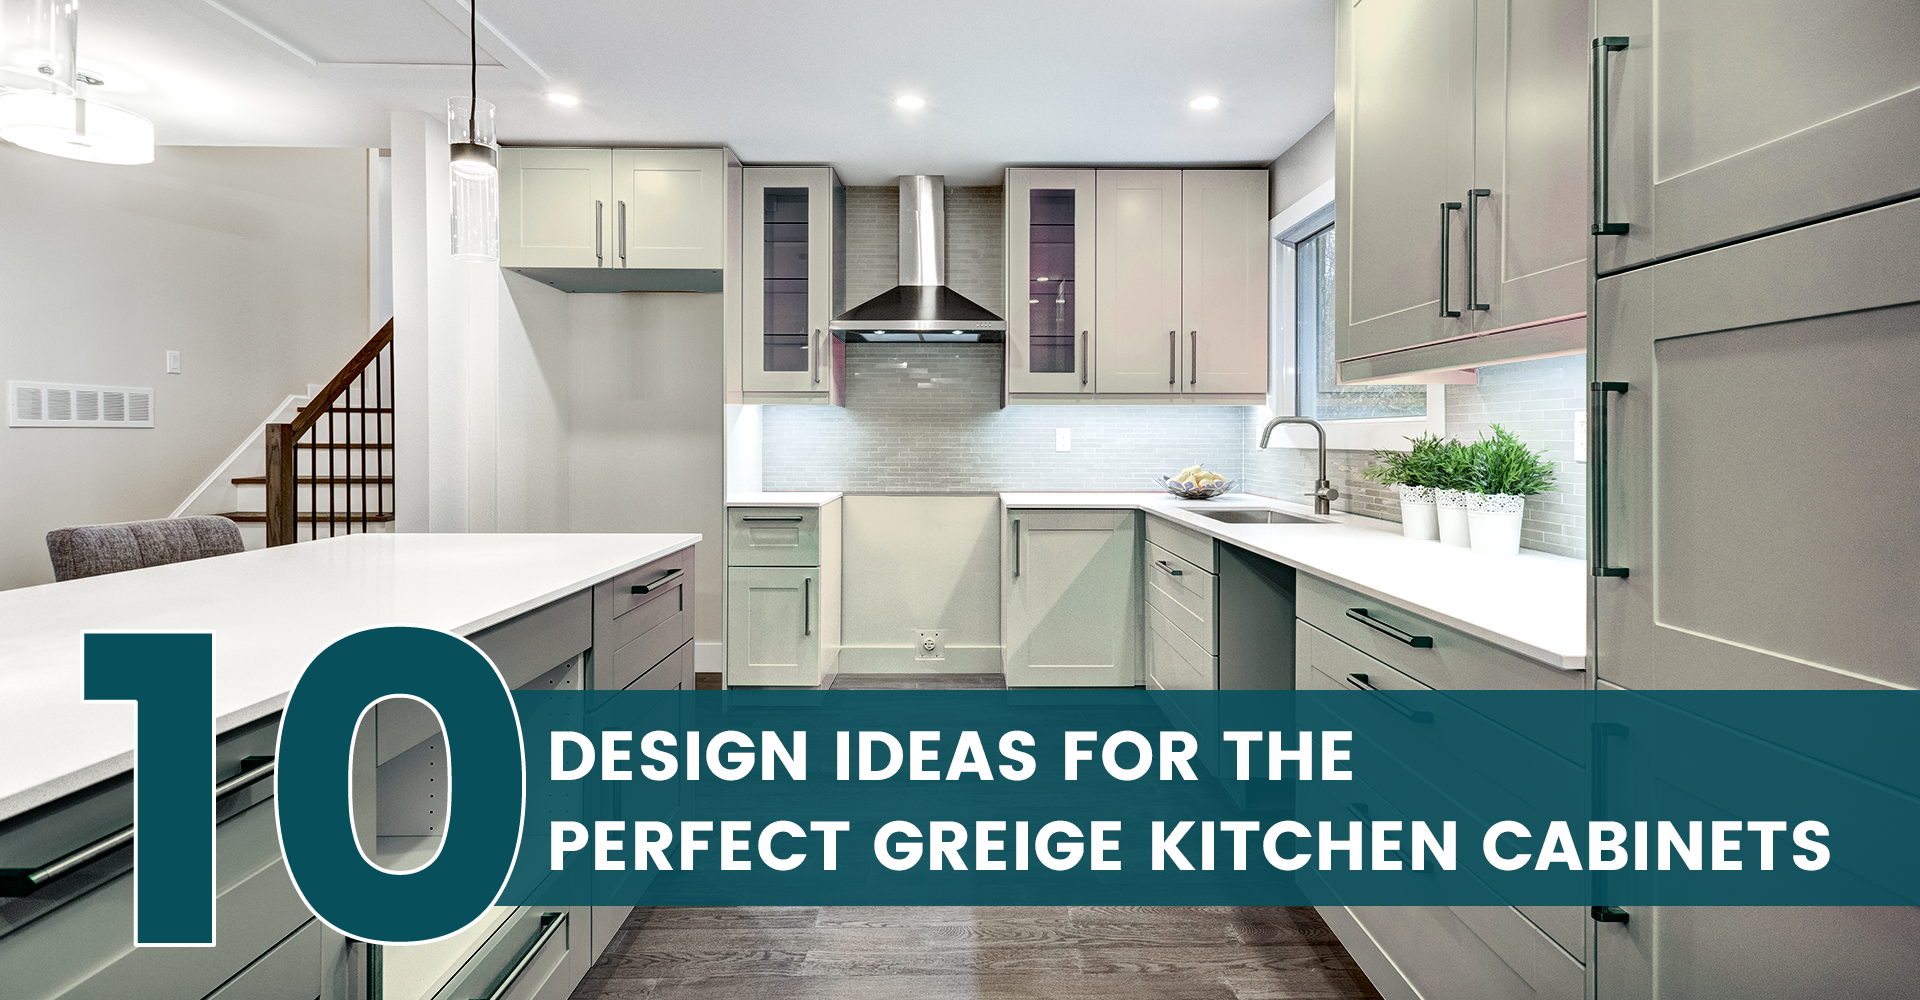 15 Neutral Kitchen Decor Ideas with Contemporary Style  Neutral kitchen  designs, Neutral kitchen, Contrasting kitchen island